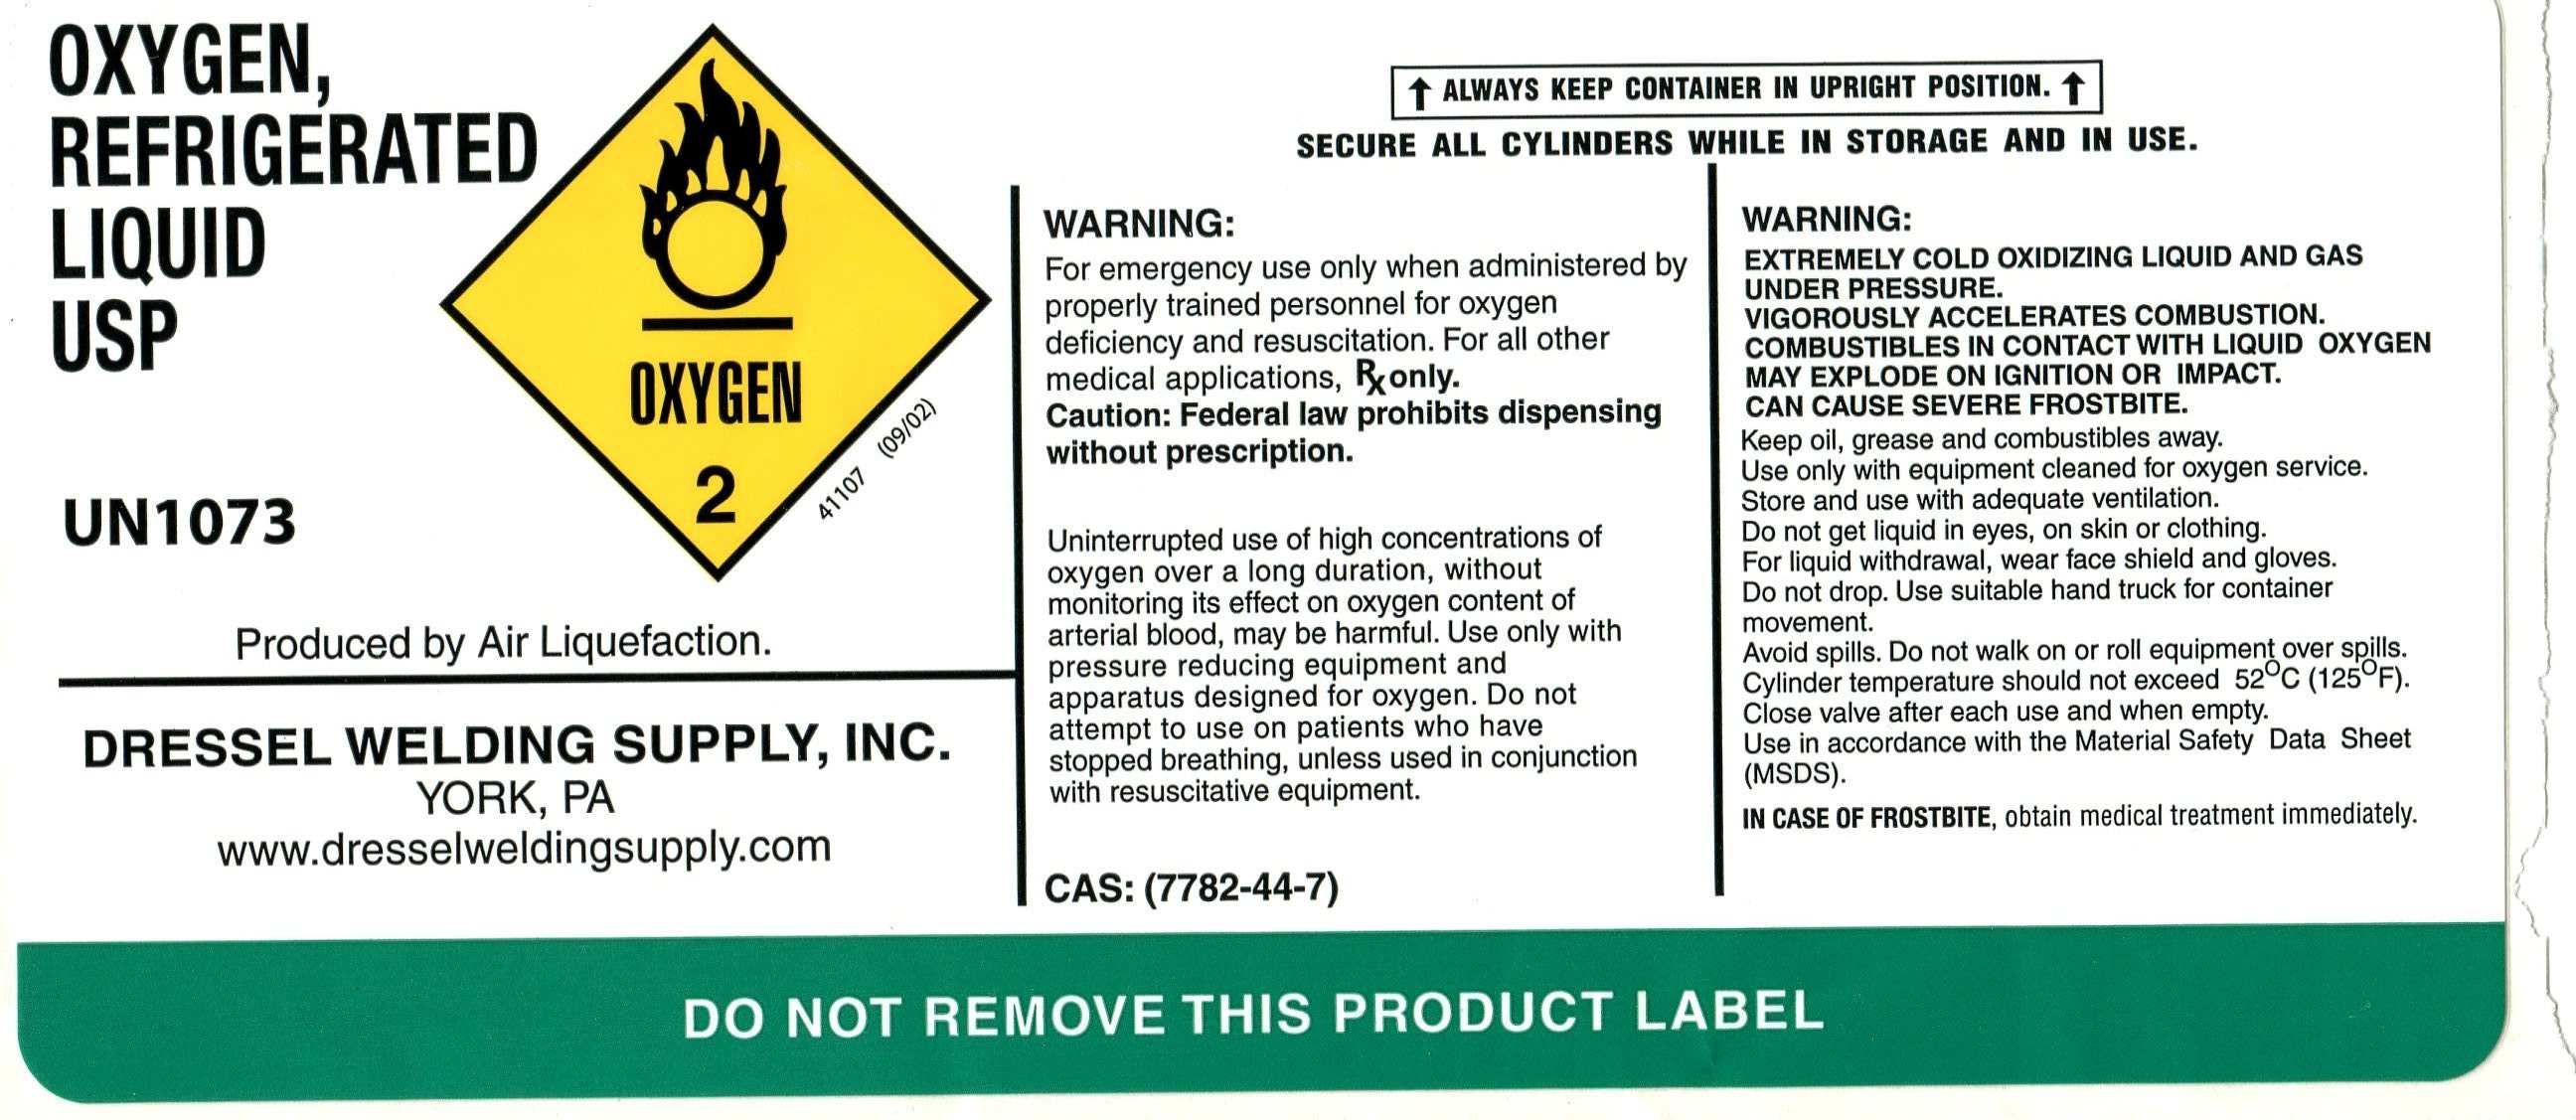 image of USP LOX label